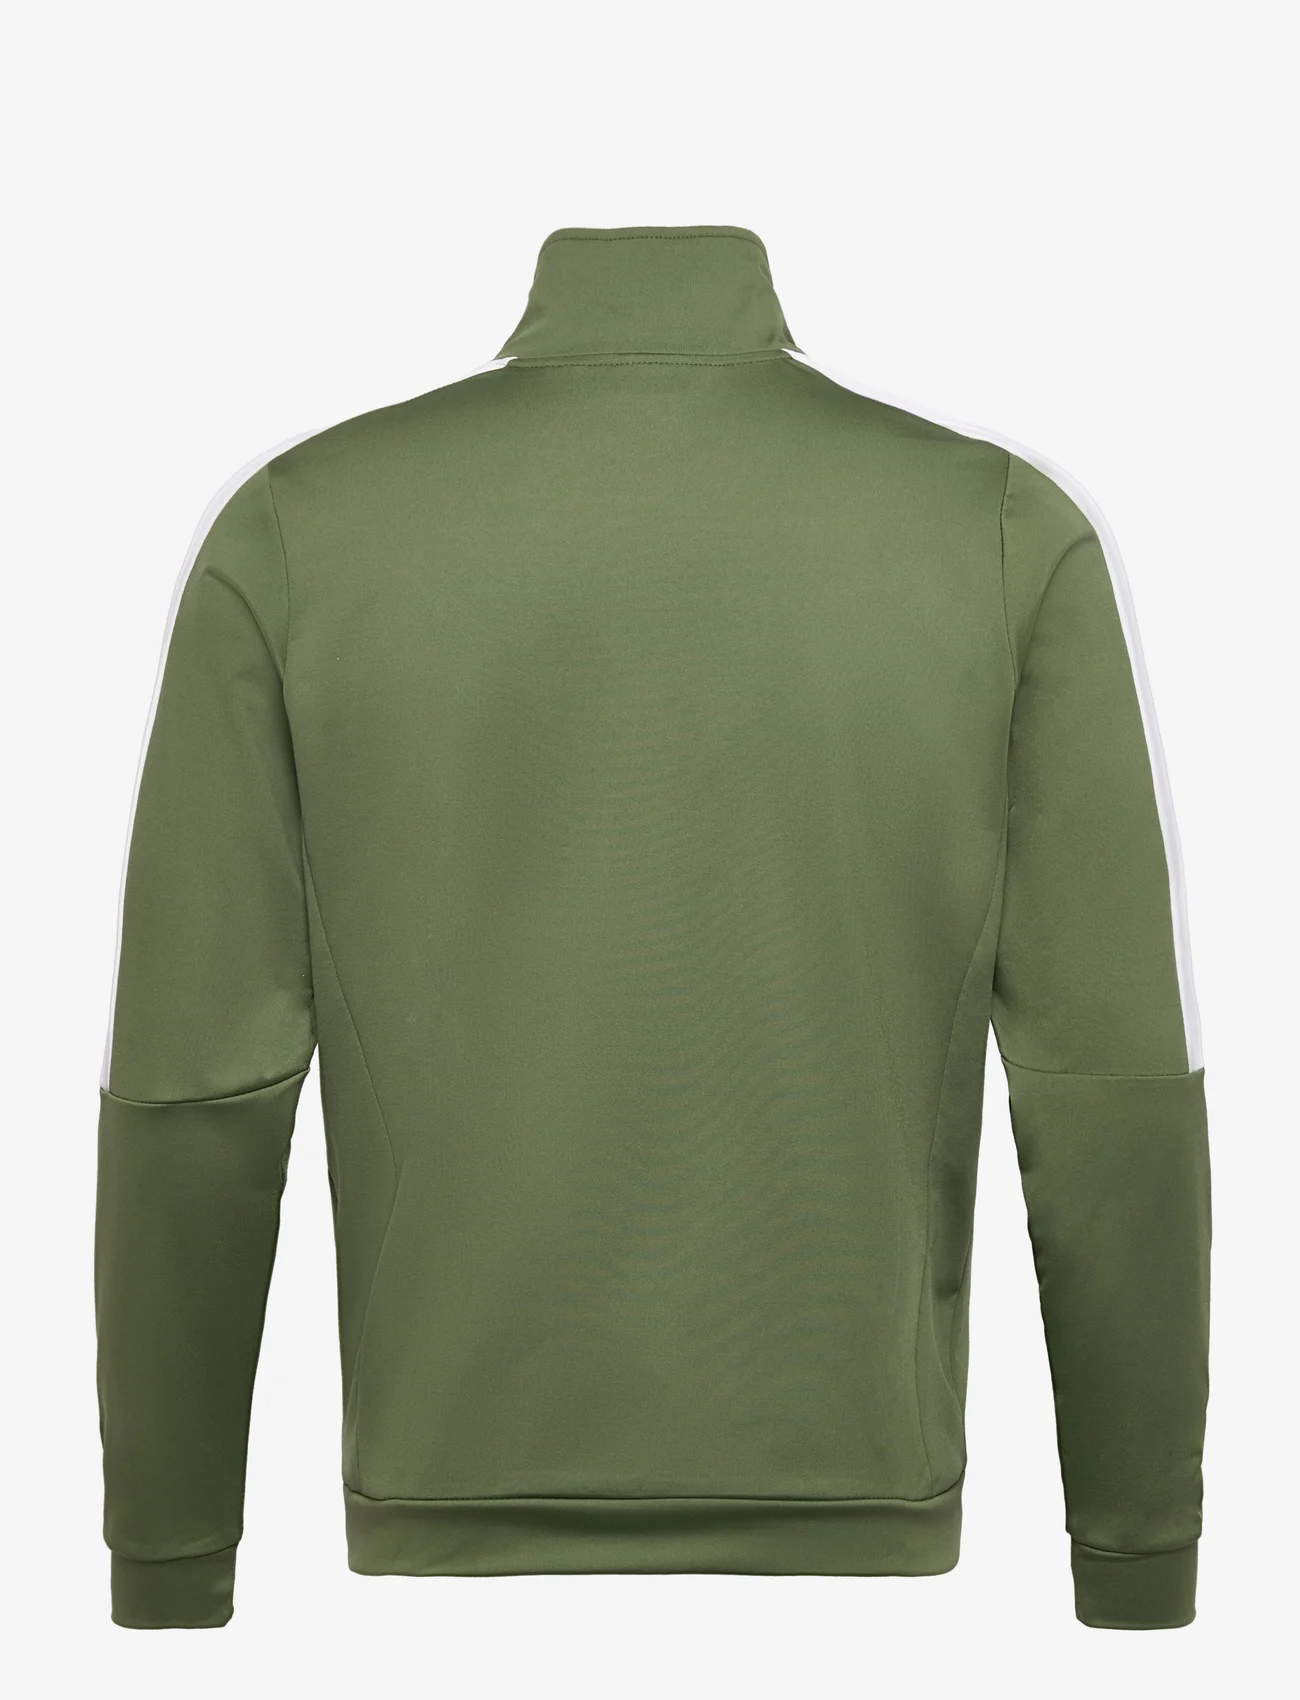 Lexton Links - Franklin Midlayer Jacket - mid layer jackets - olive - 1